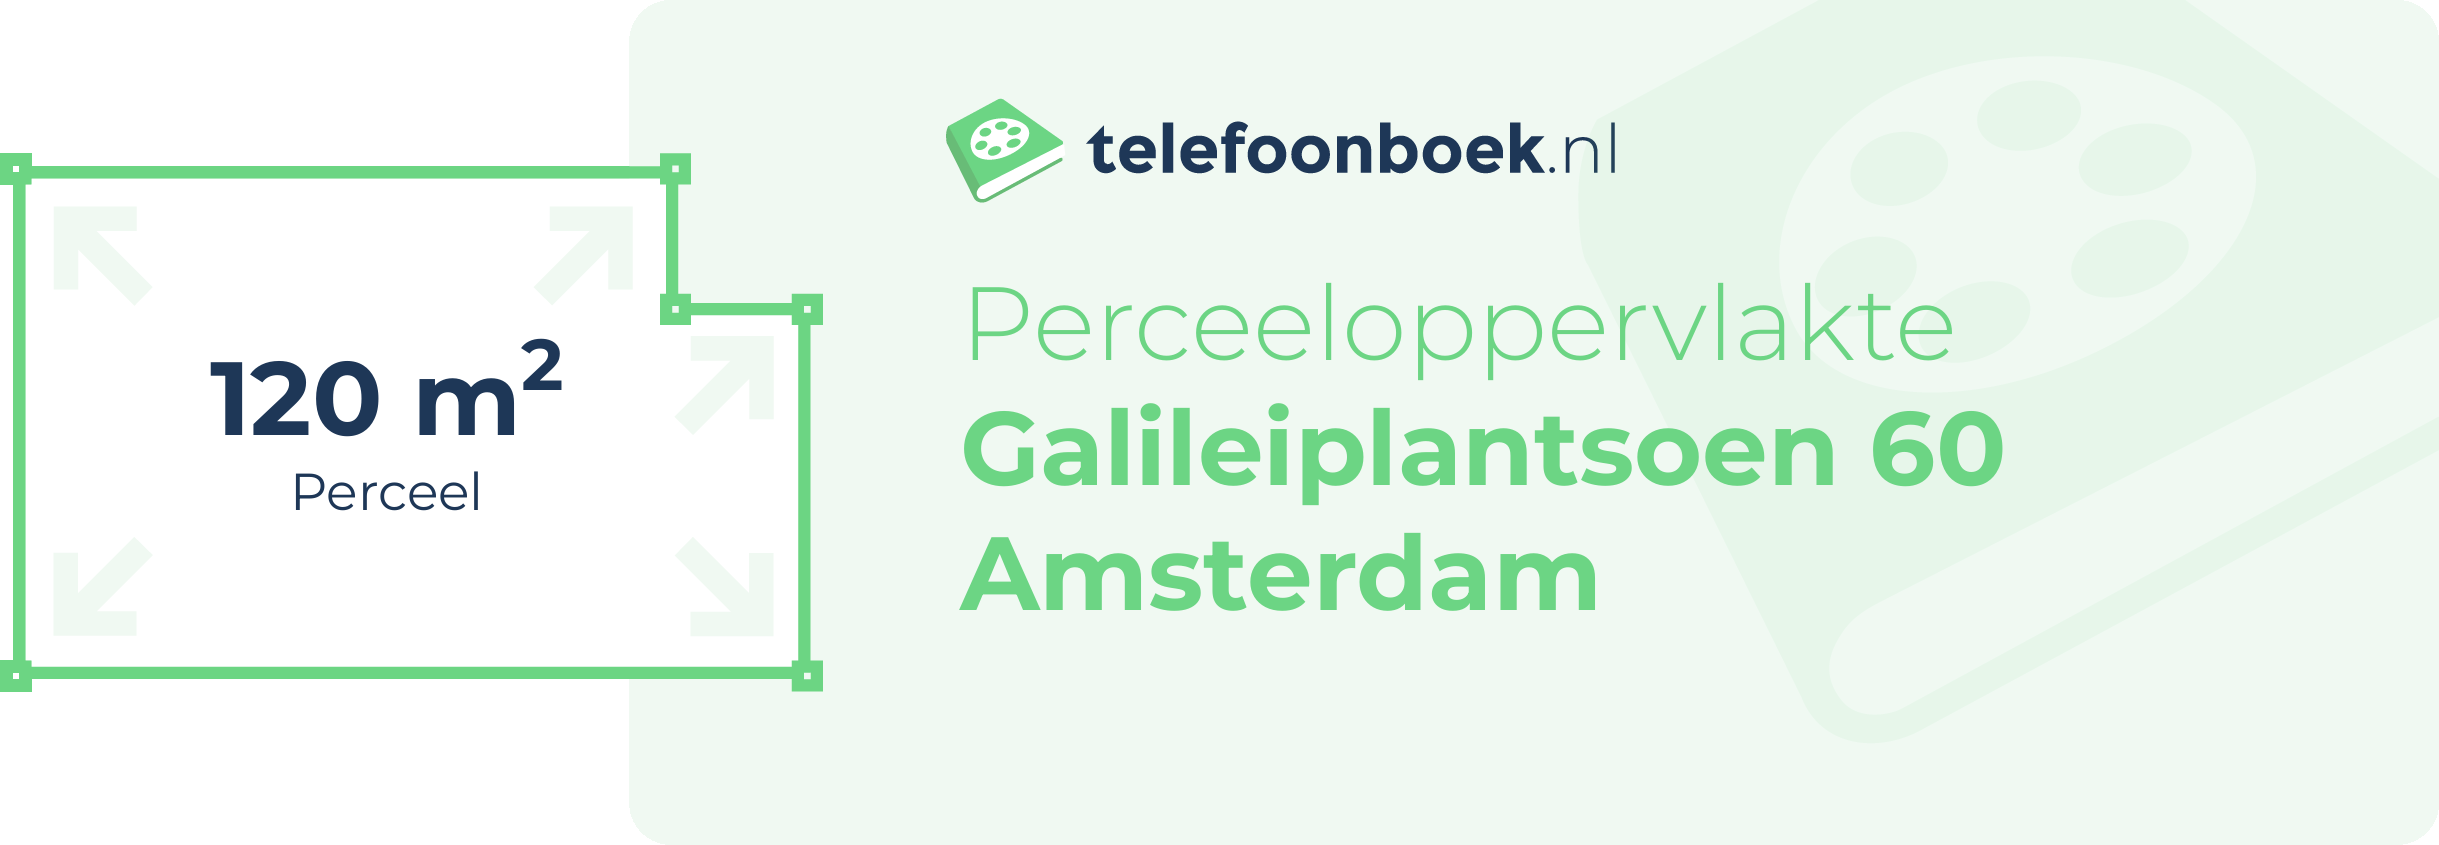 Perceeloppervlakte Galileiplantsoen 60 Amsterdam